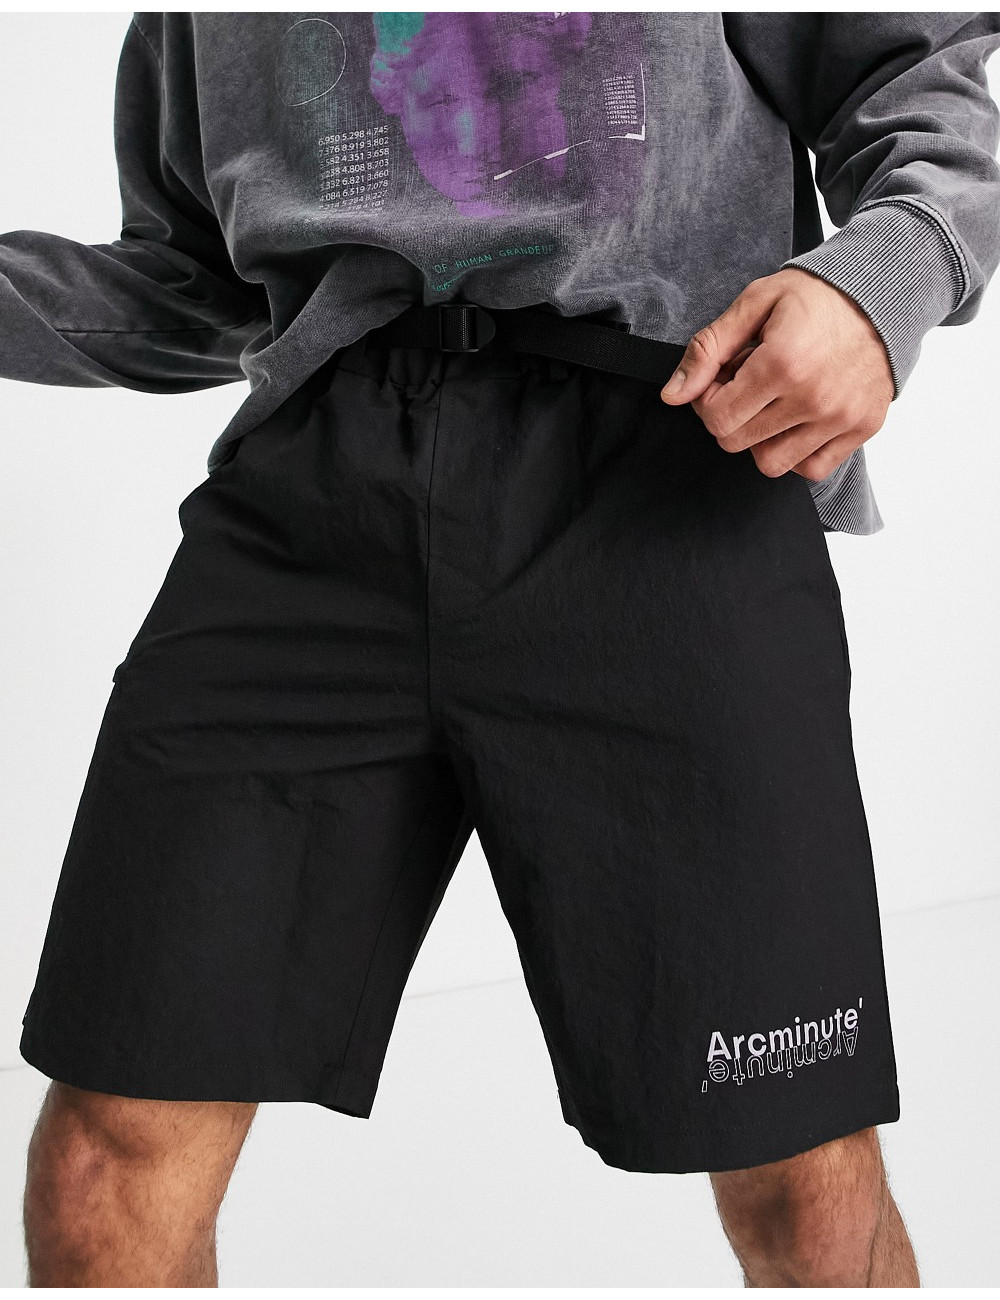 Arcminute nylon shorts with...